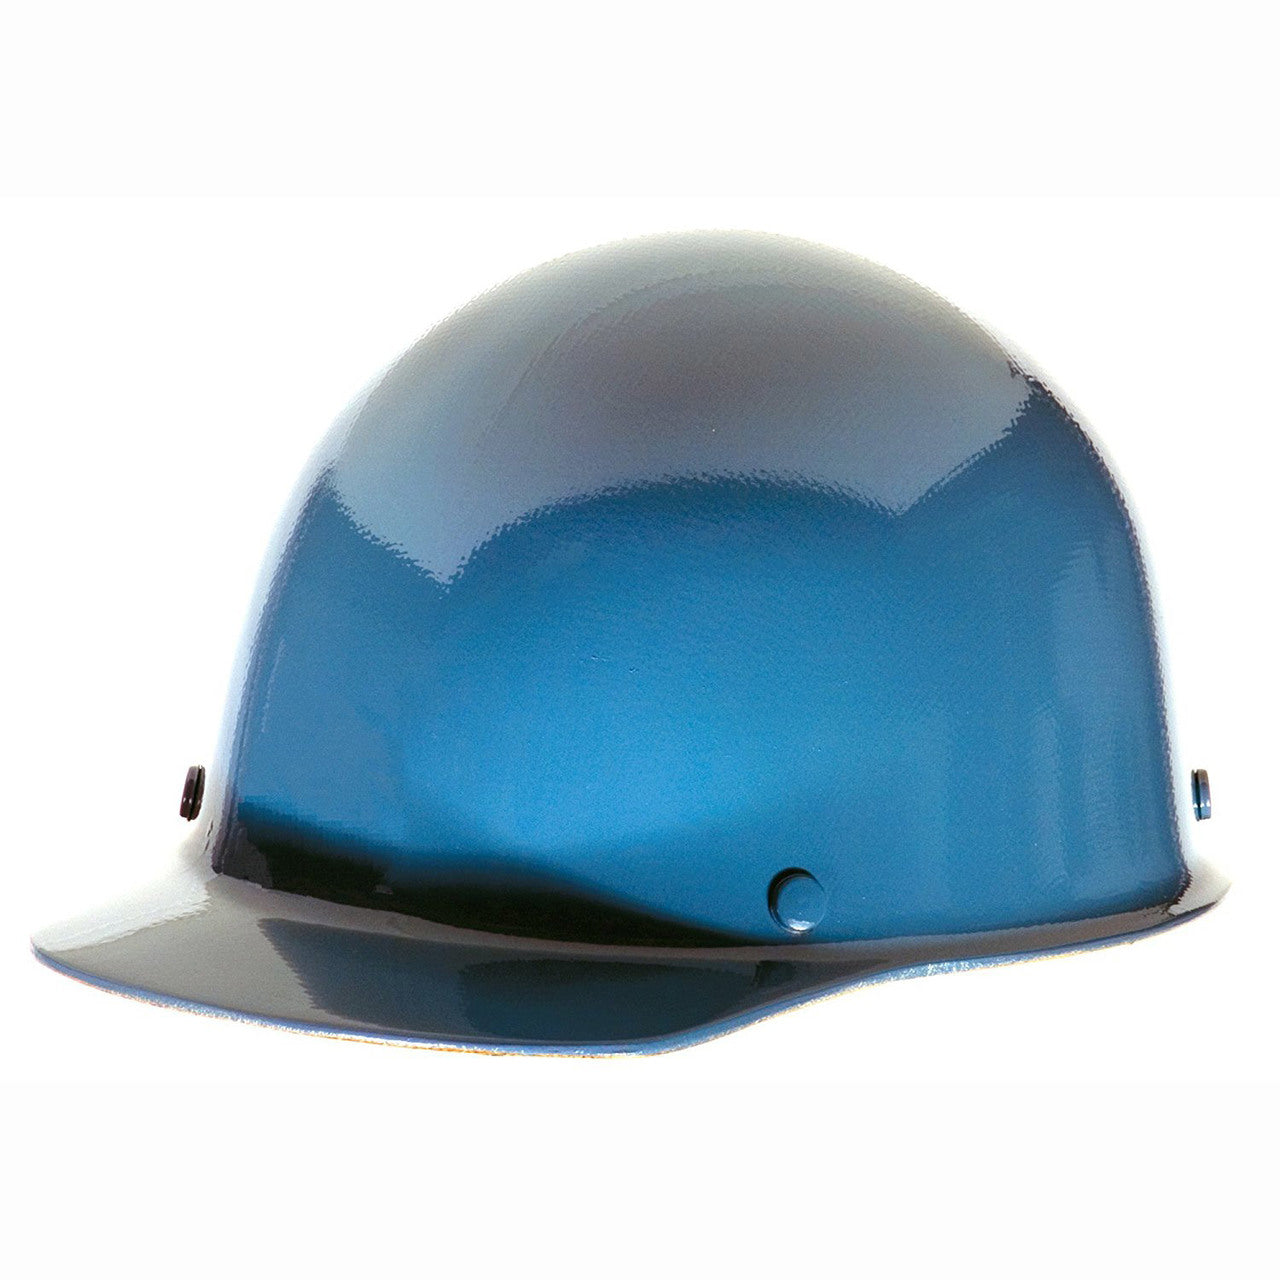 MSA SkullGard Protective Caps and Hats